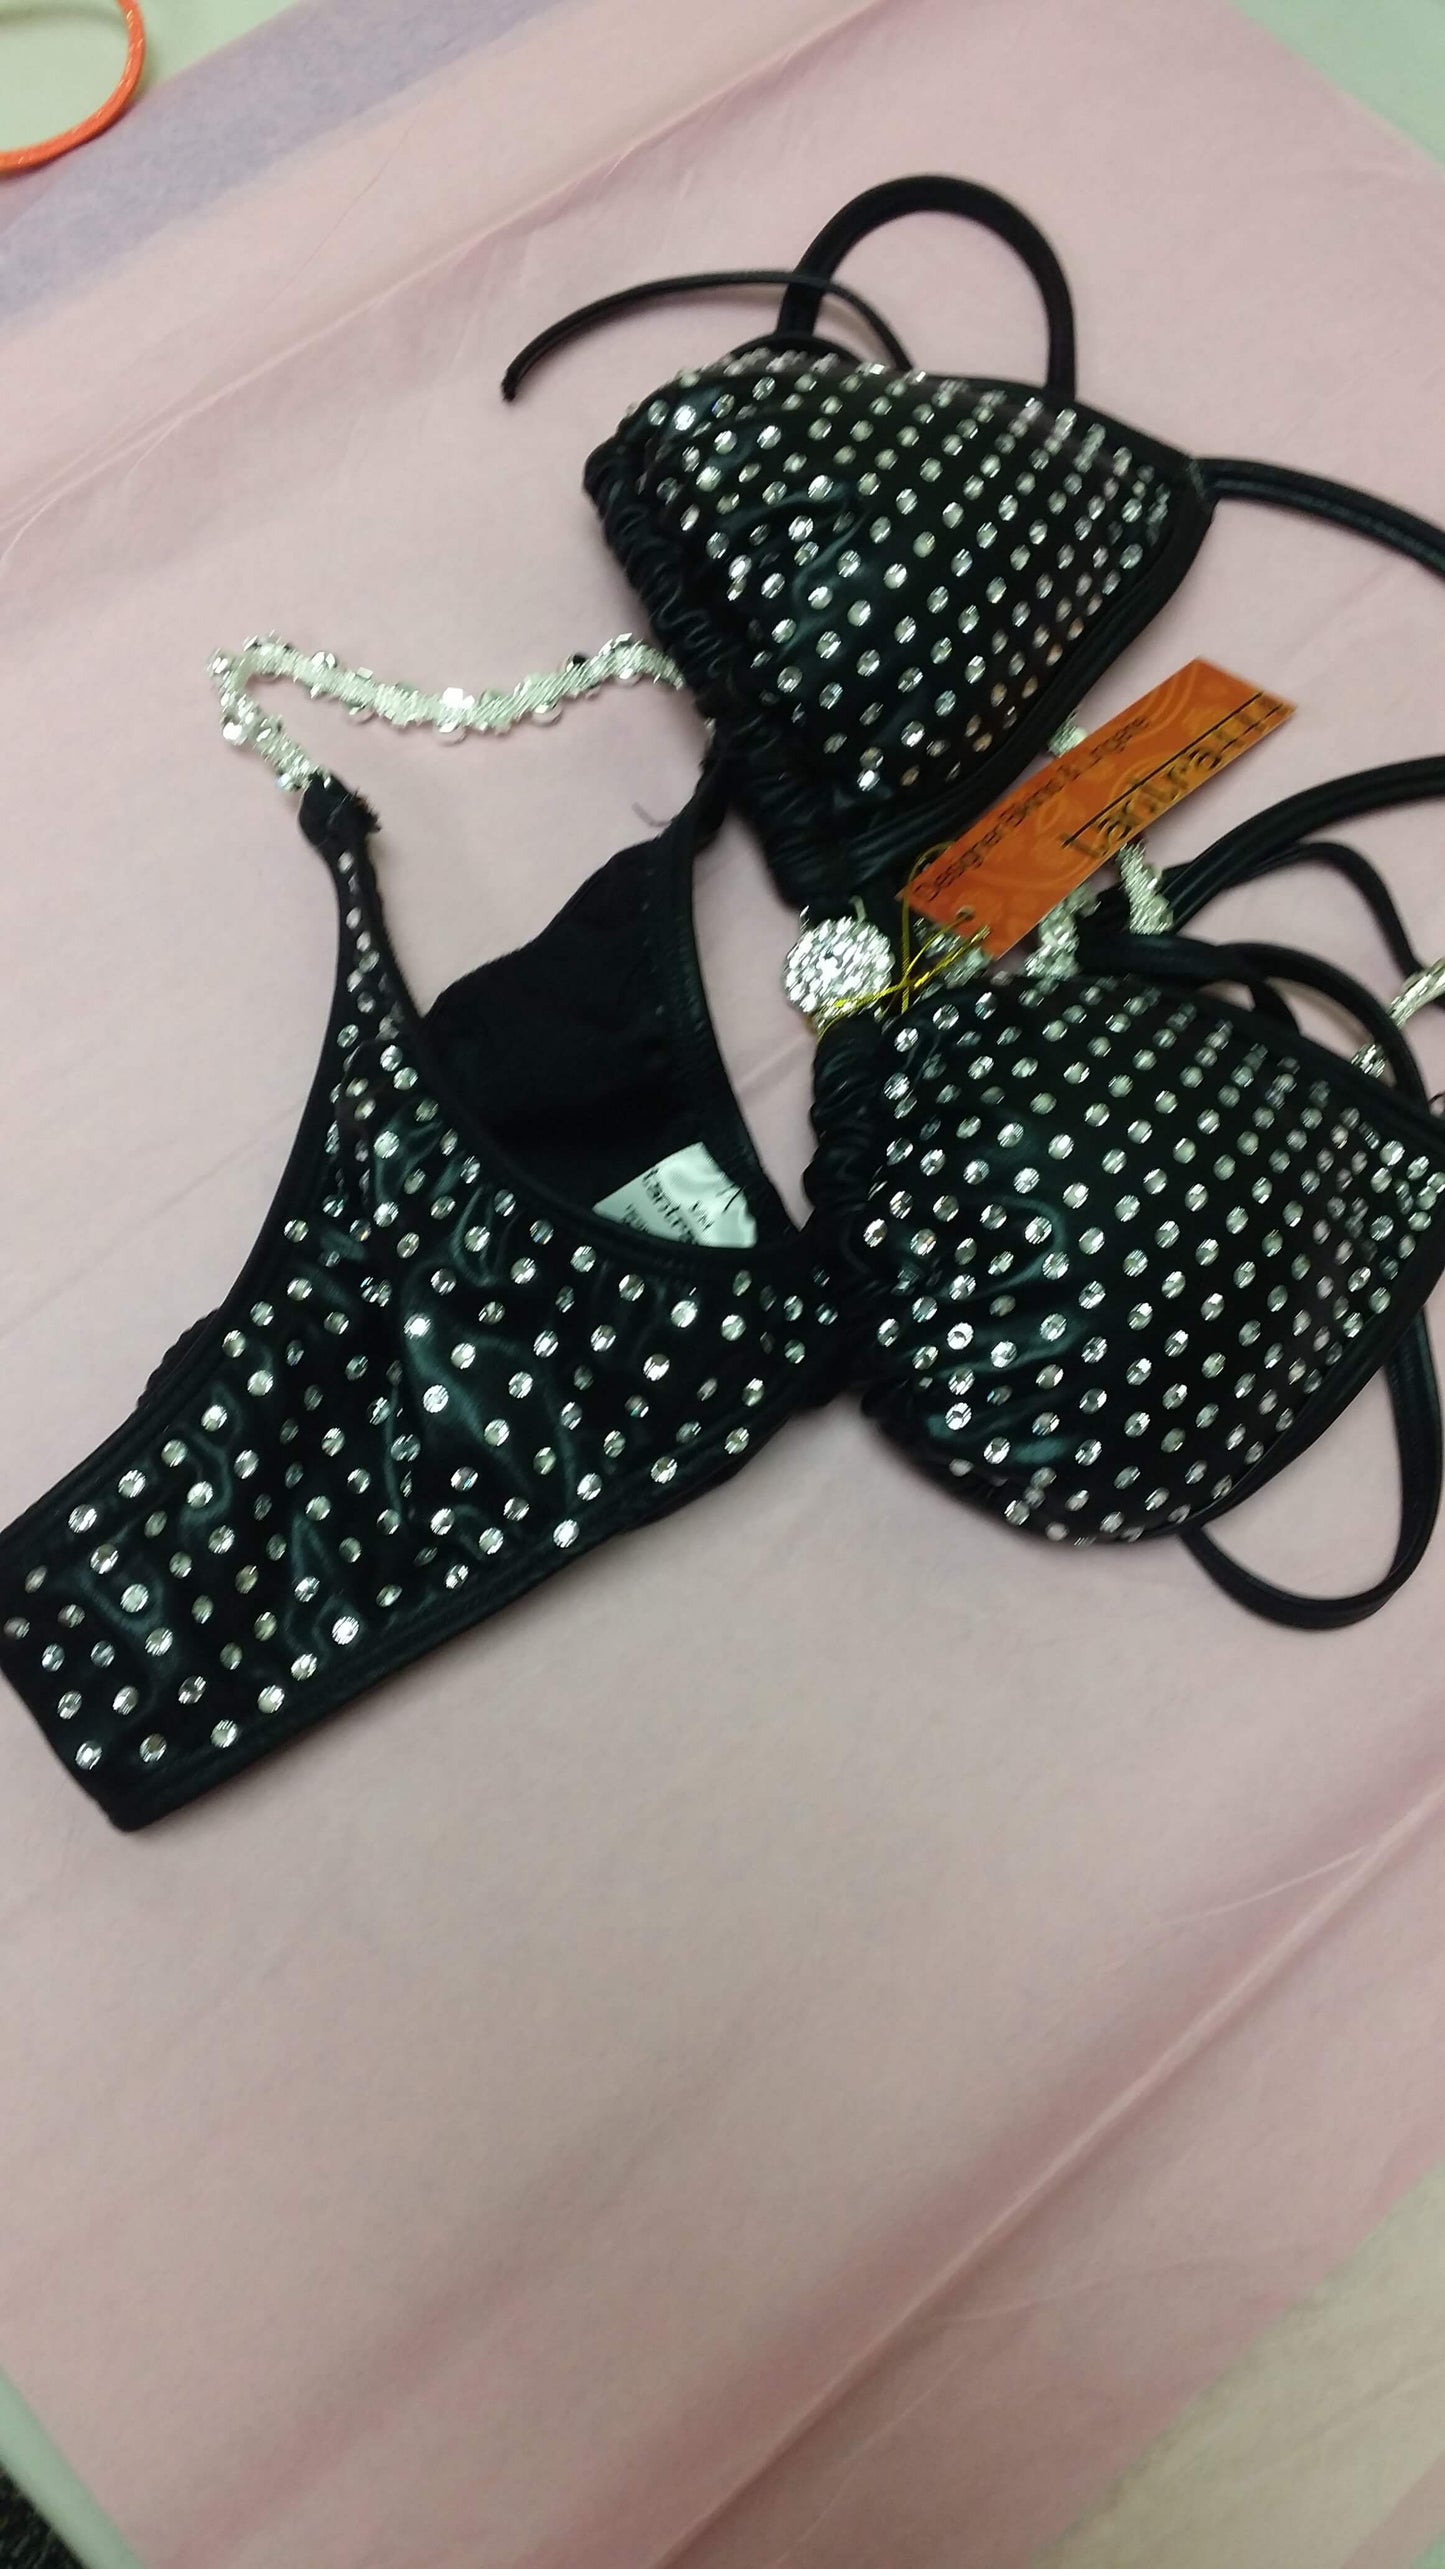 Black pleather bikini with linear crystal rhinestone design